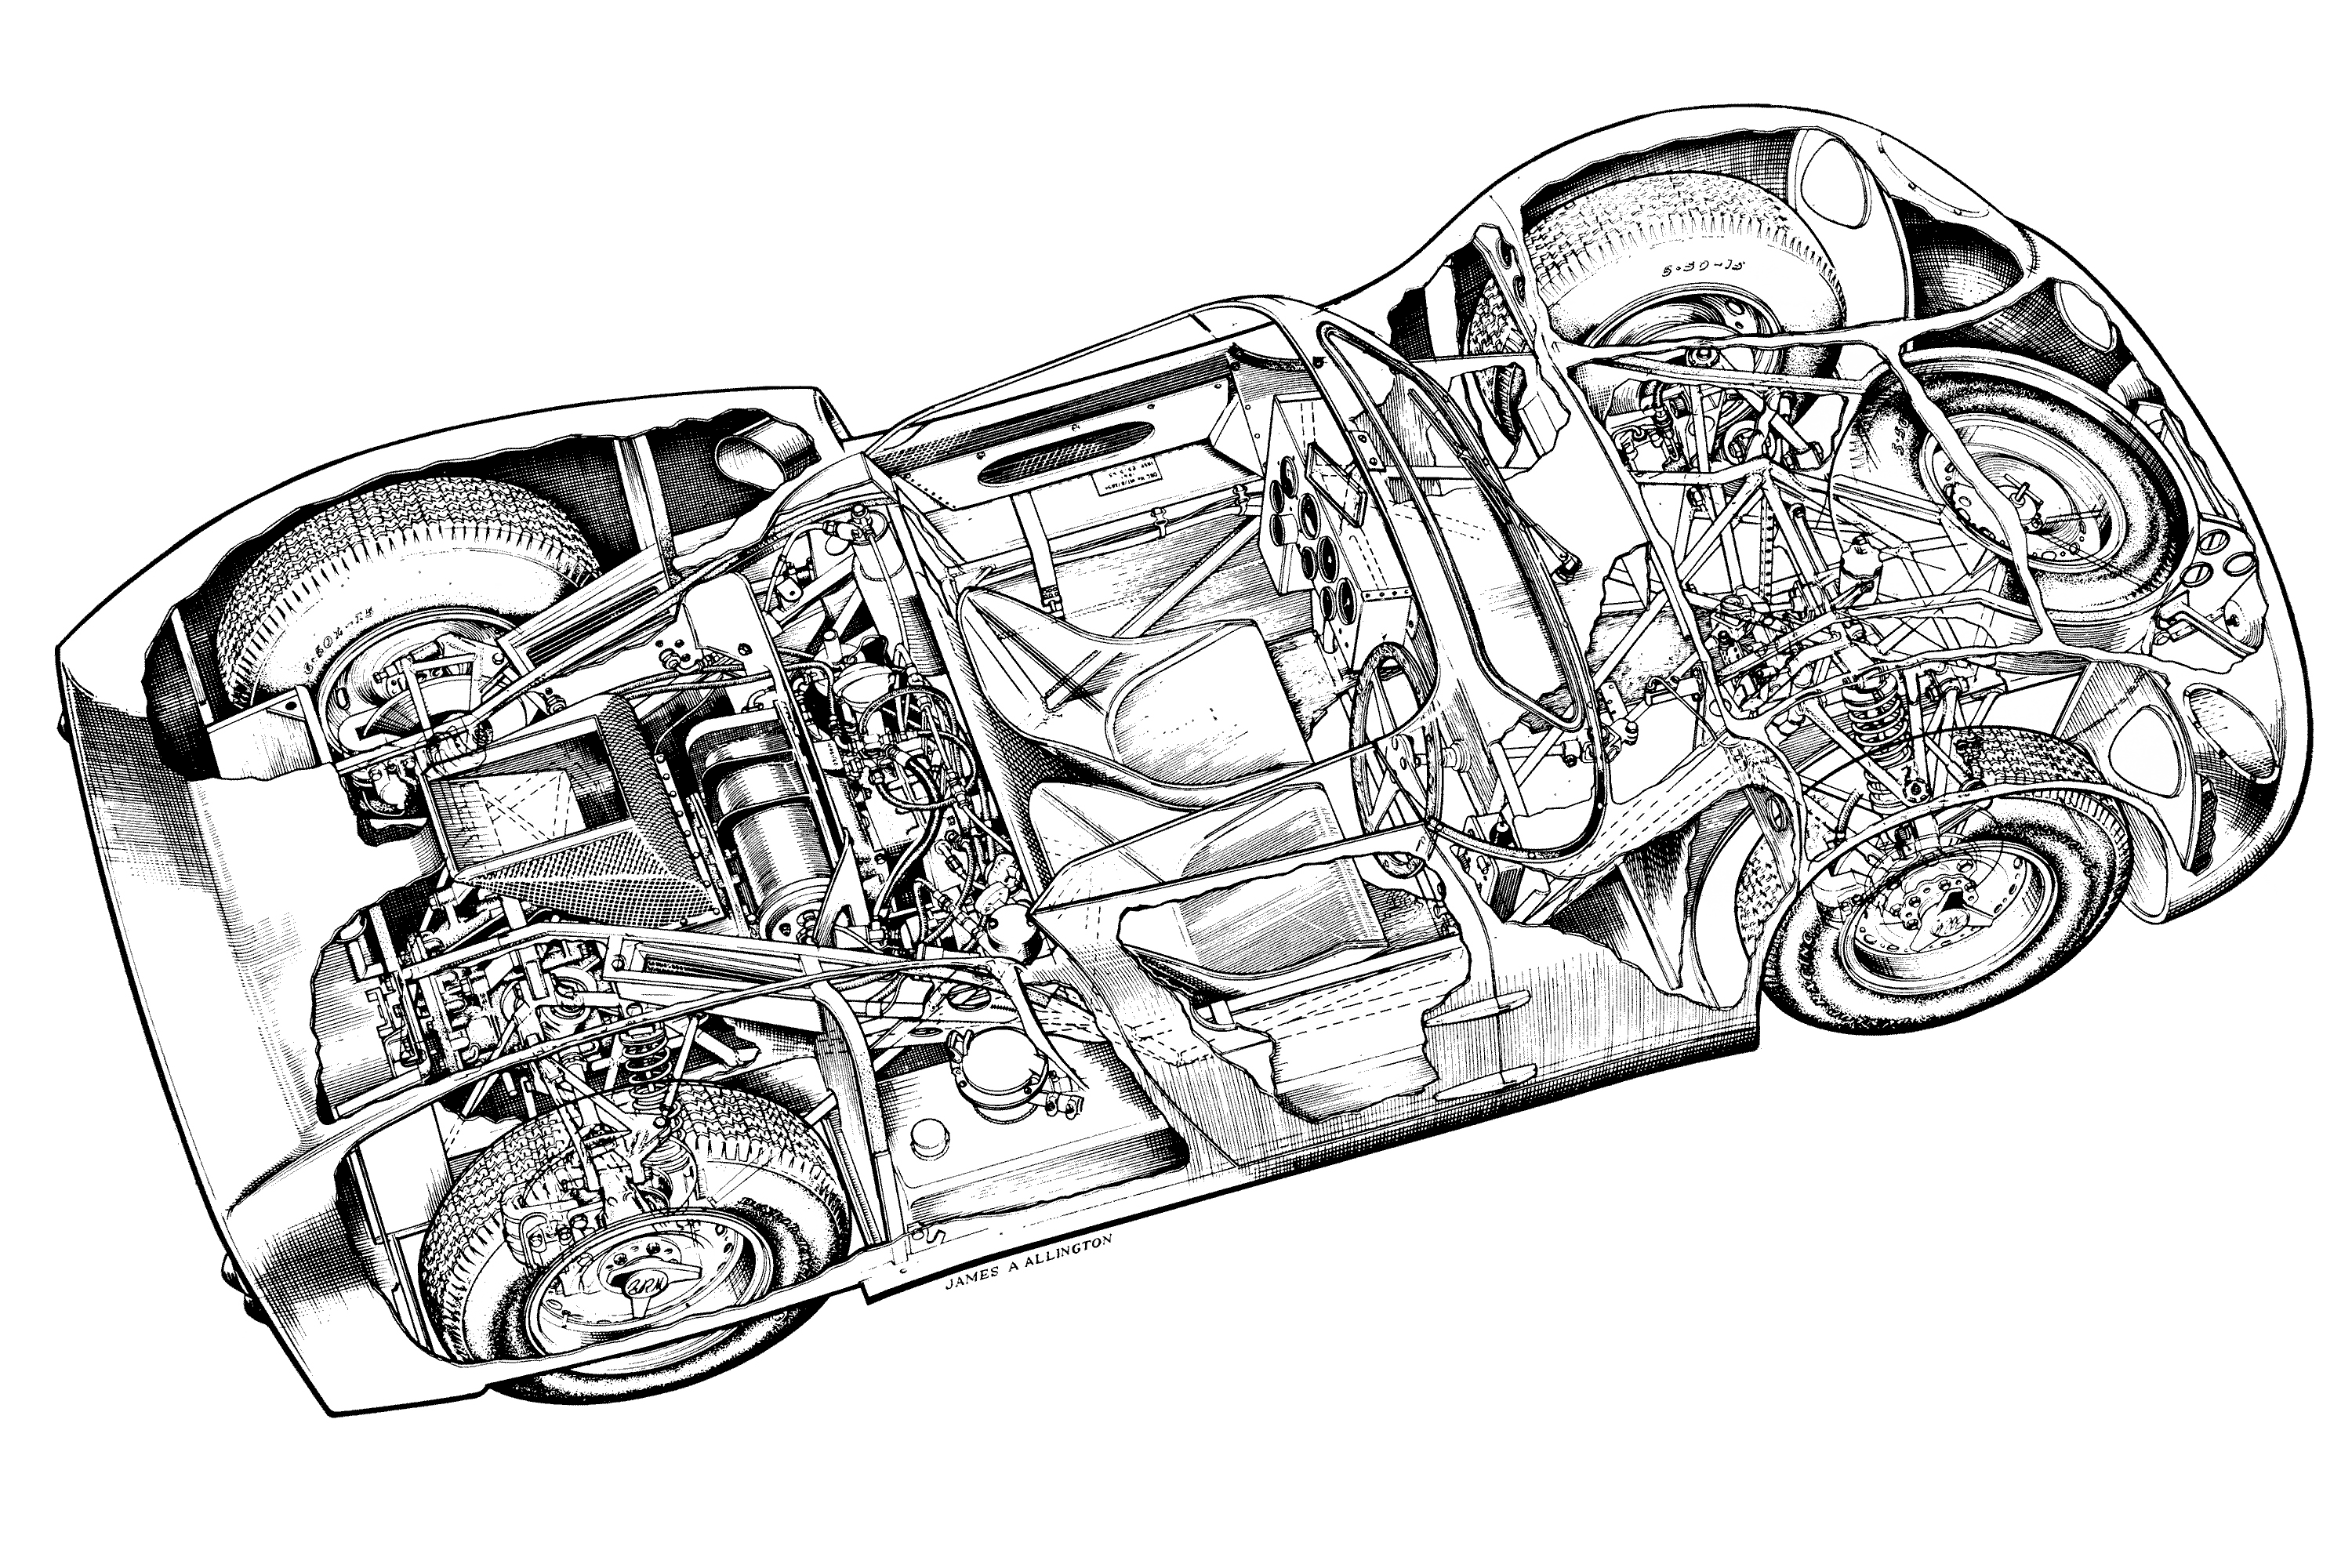 Rover-BRM cutaway drawing